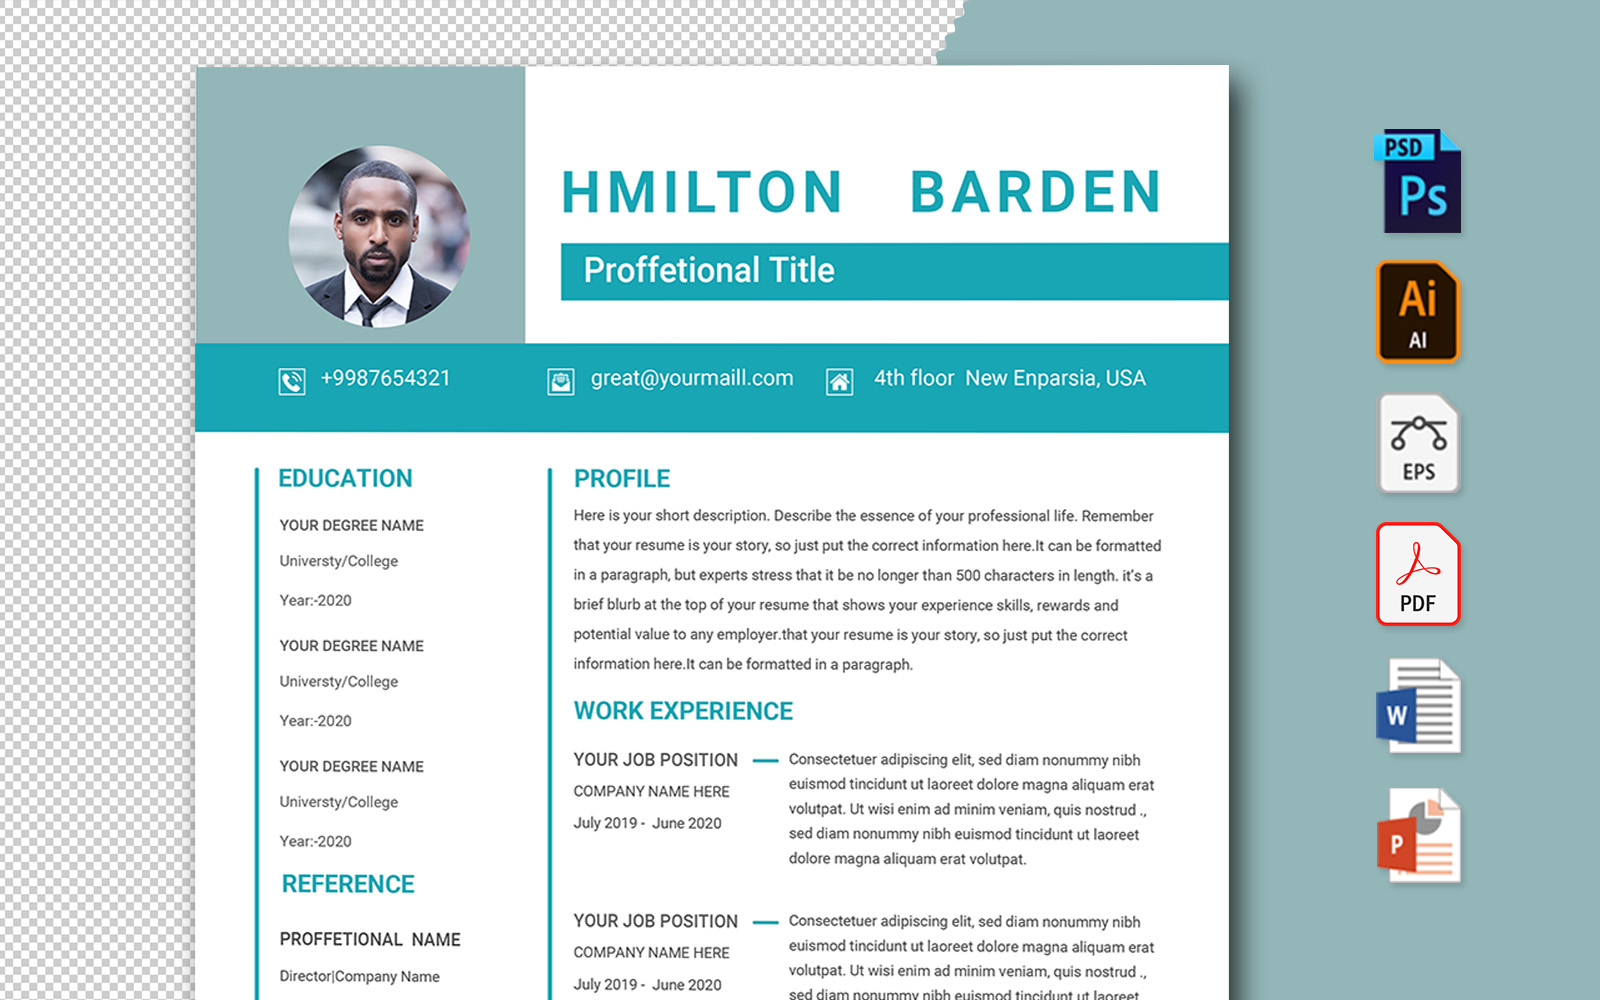 Hmilton Professional Resume Template